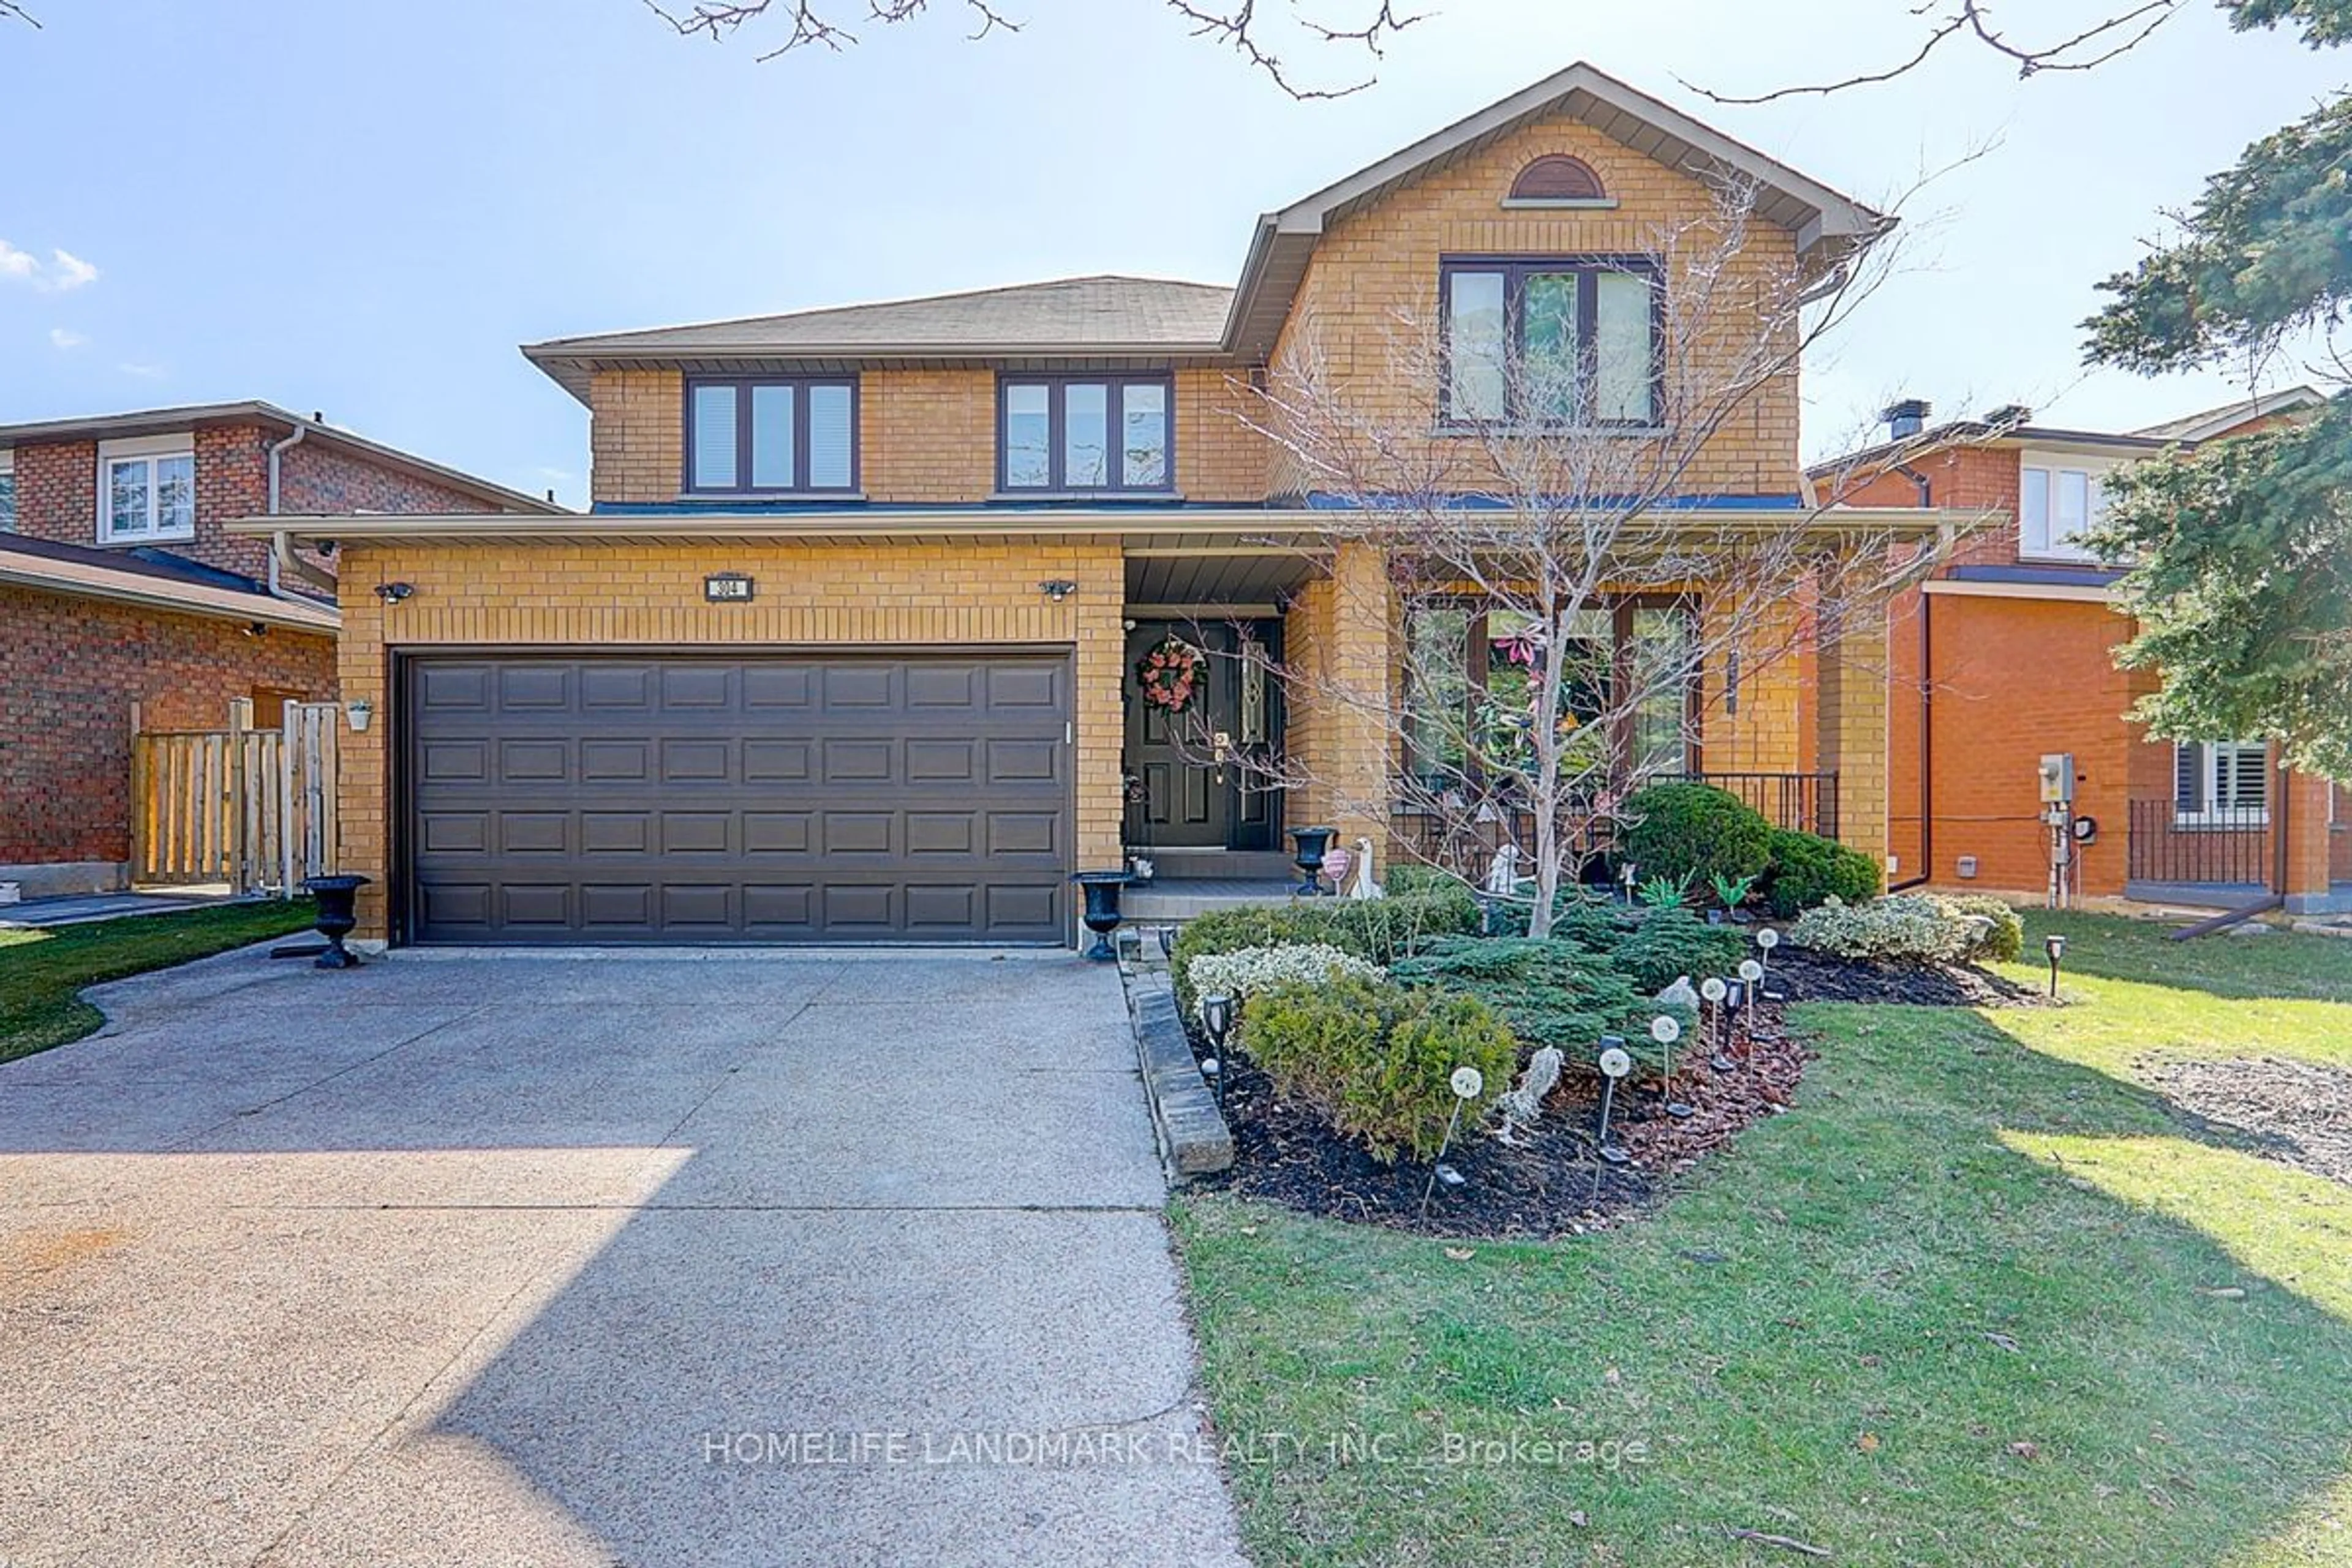 Home with brick exterior material for 304 Goldhawk Tr, Toronto Ontario M1V 4H2